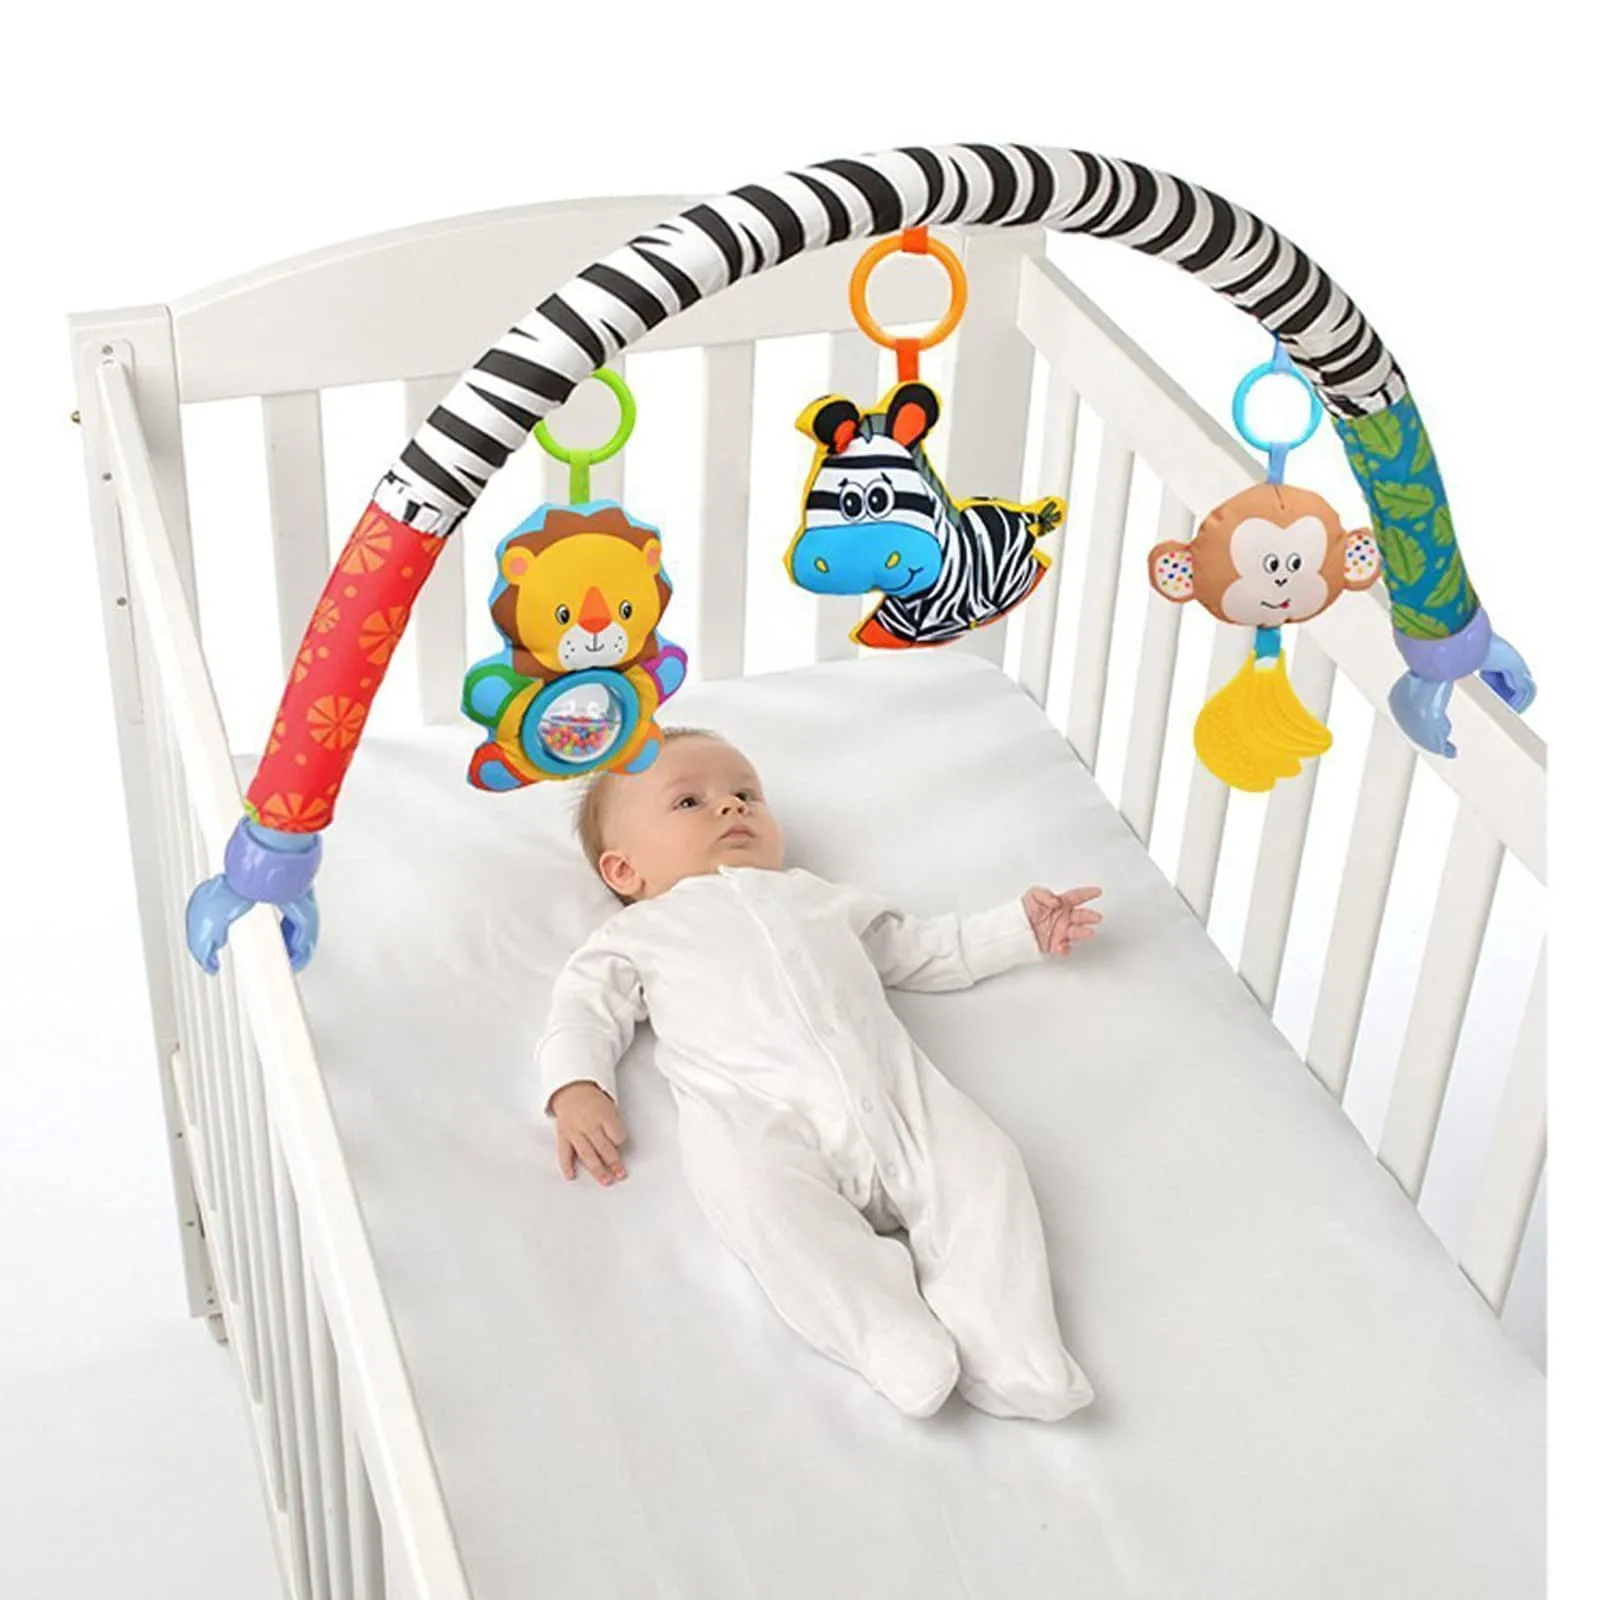 VX-star Baby Travel Play Arch Stroller/Crib Accessory